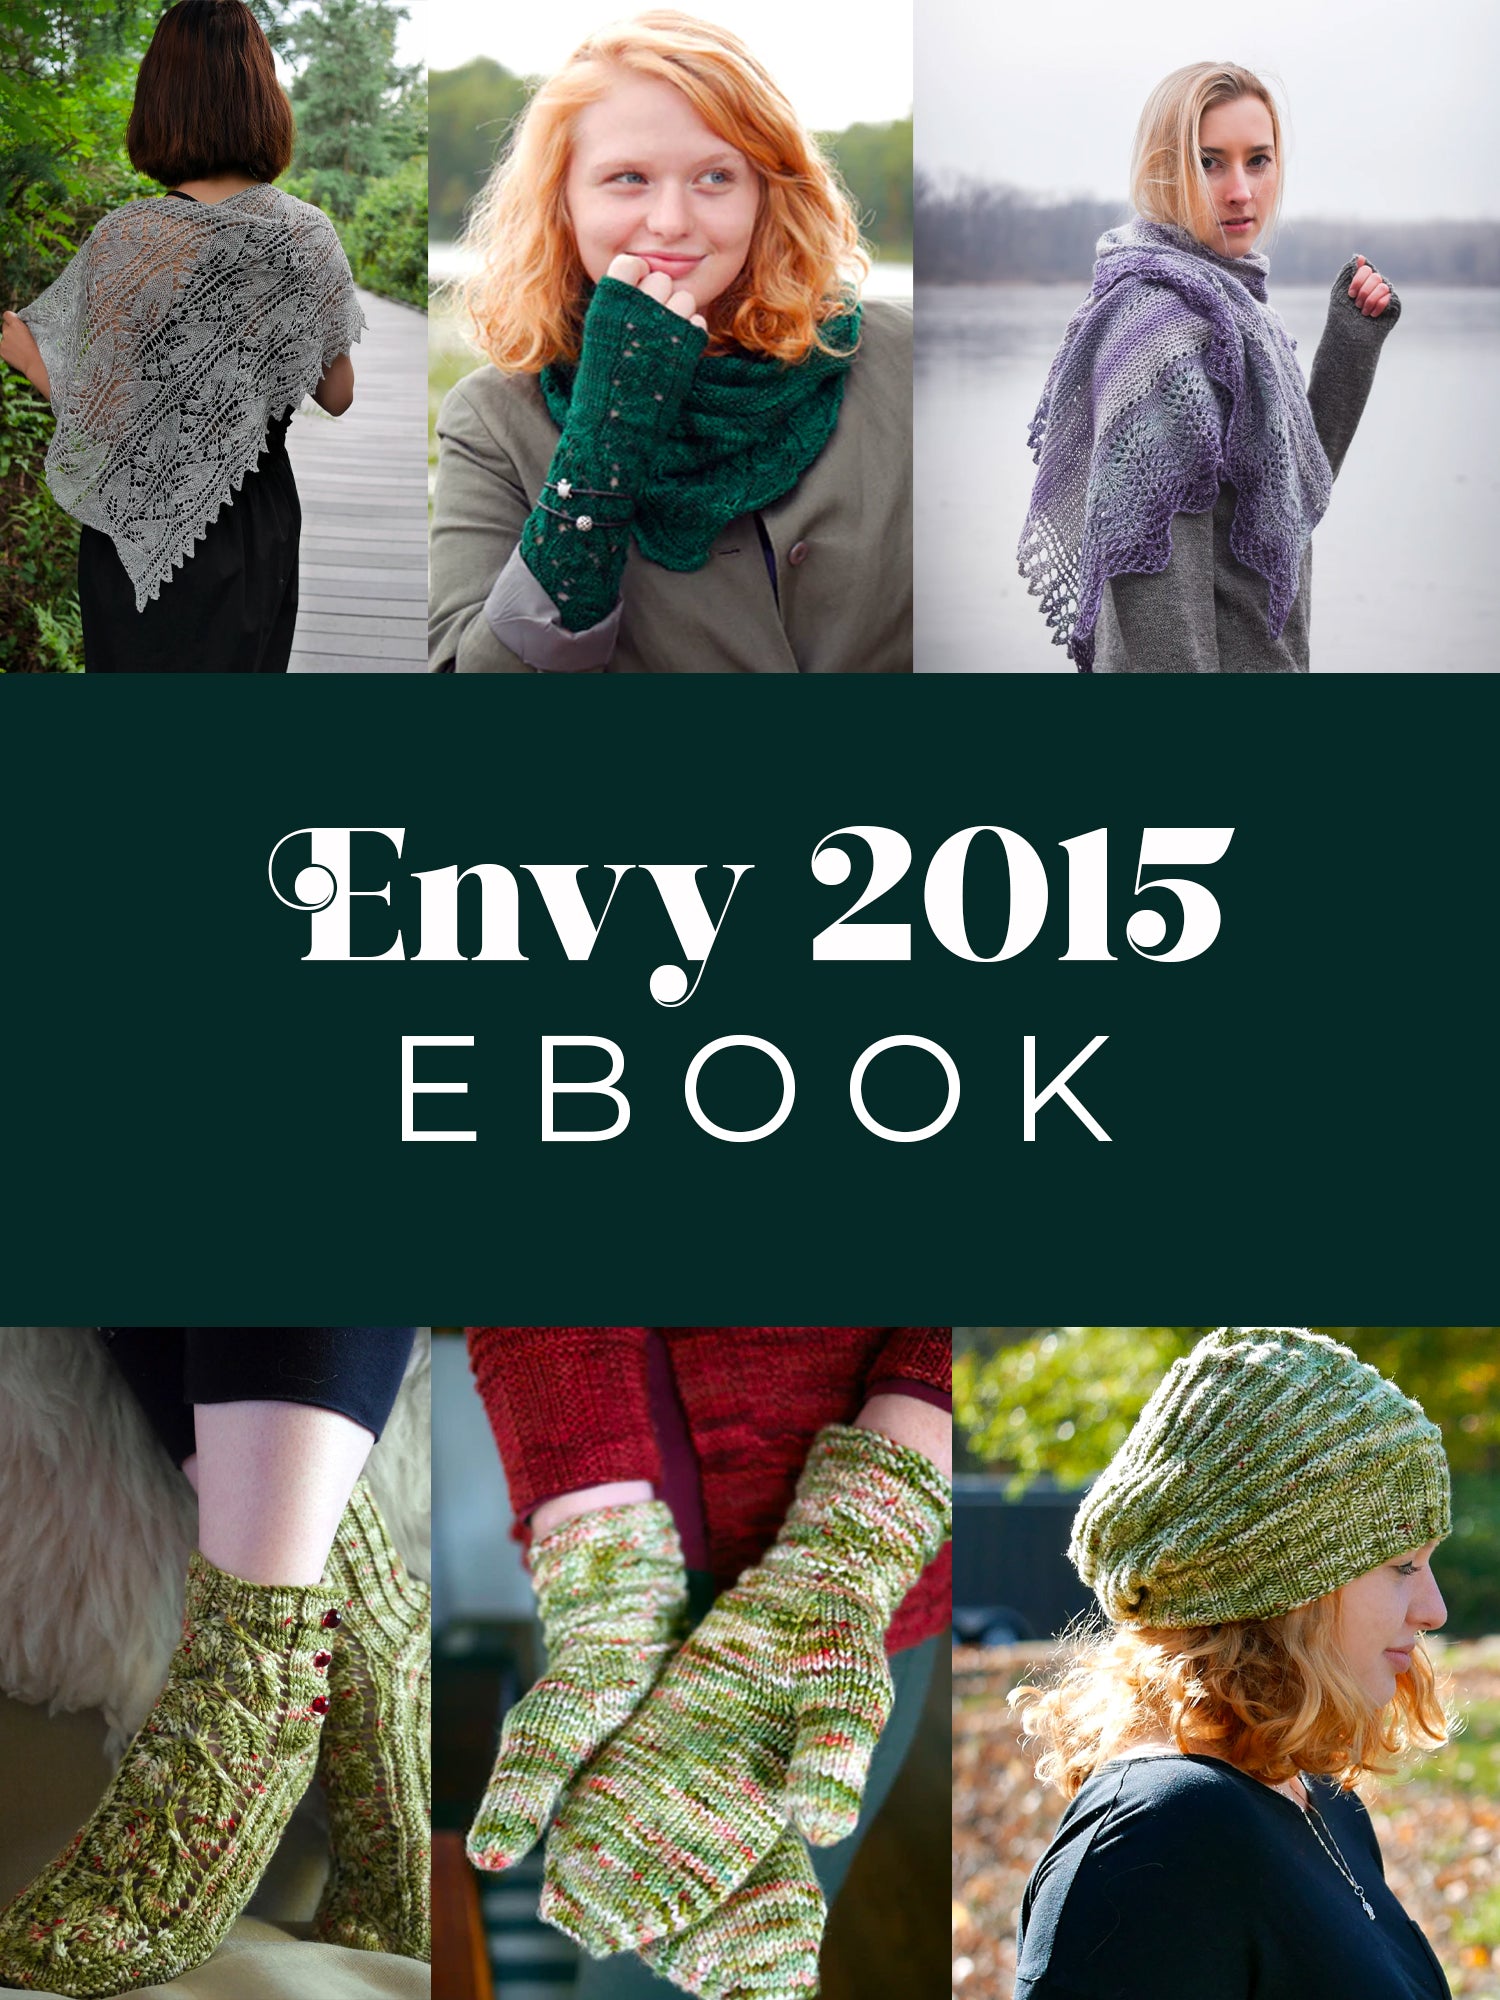 Envy 2015 eBook